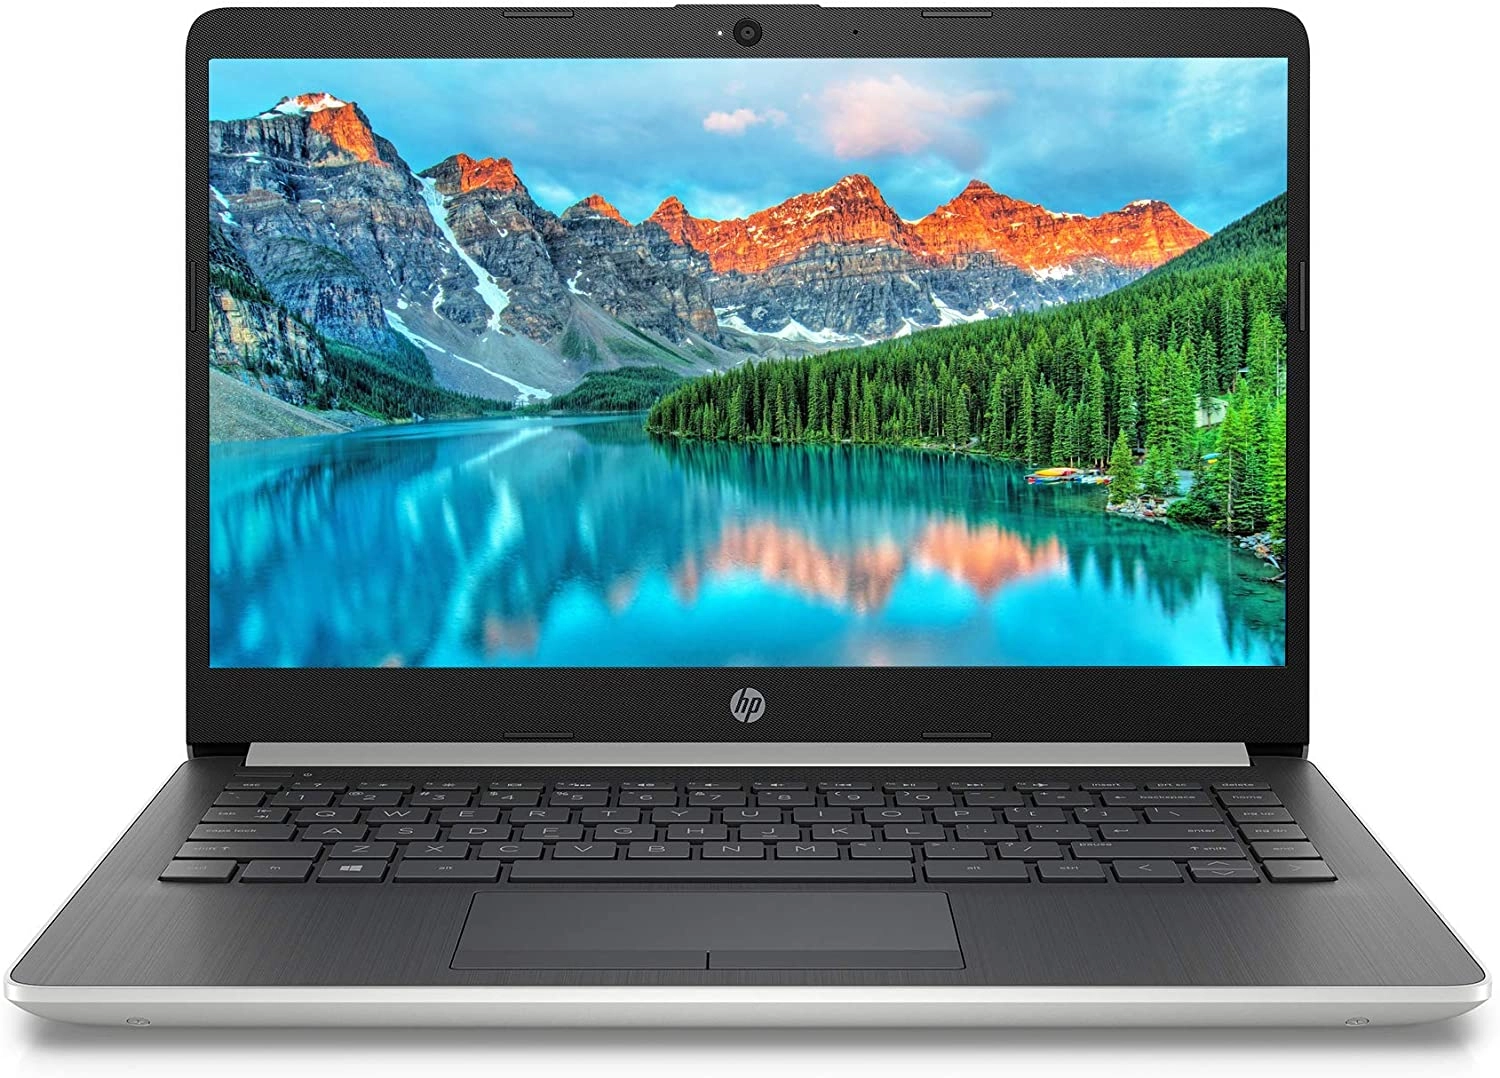 HP Notebook laptop image